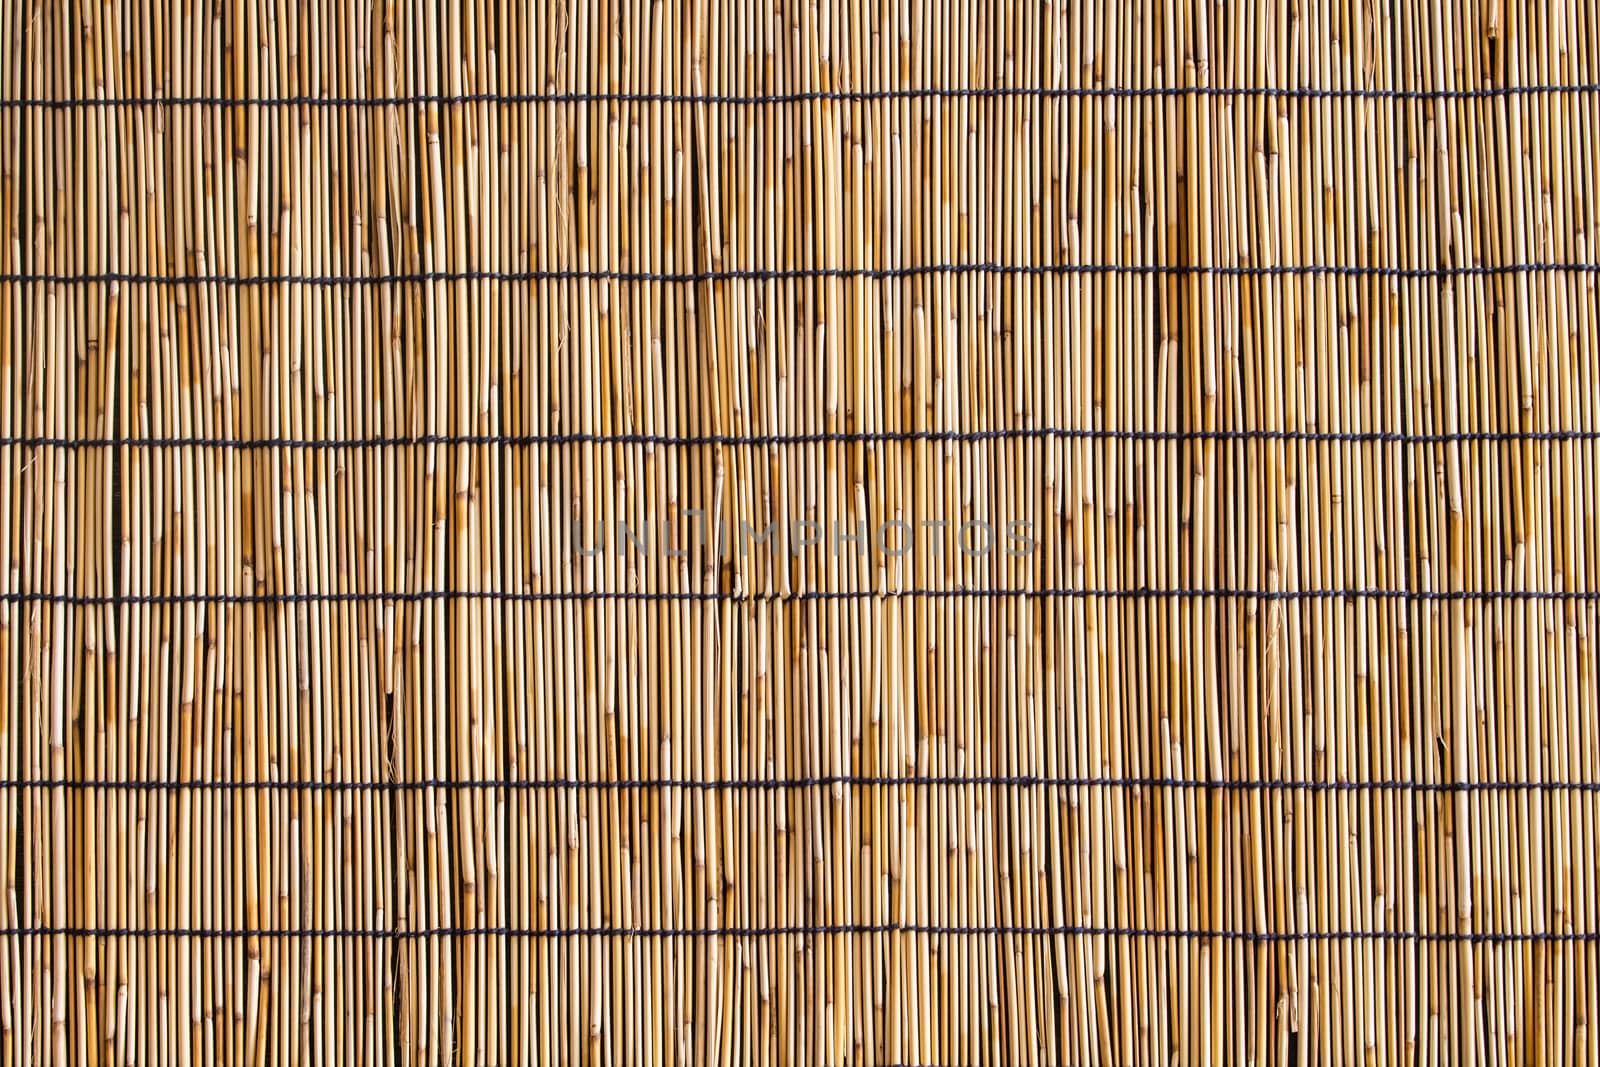 bamboo blind background